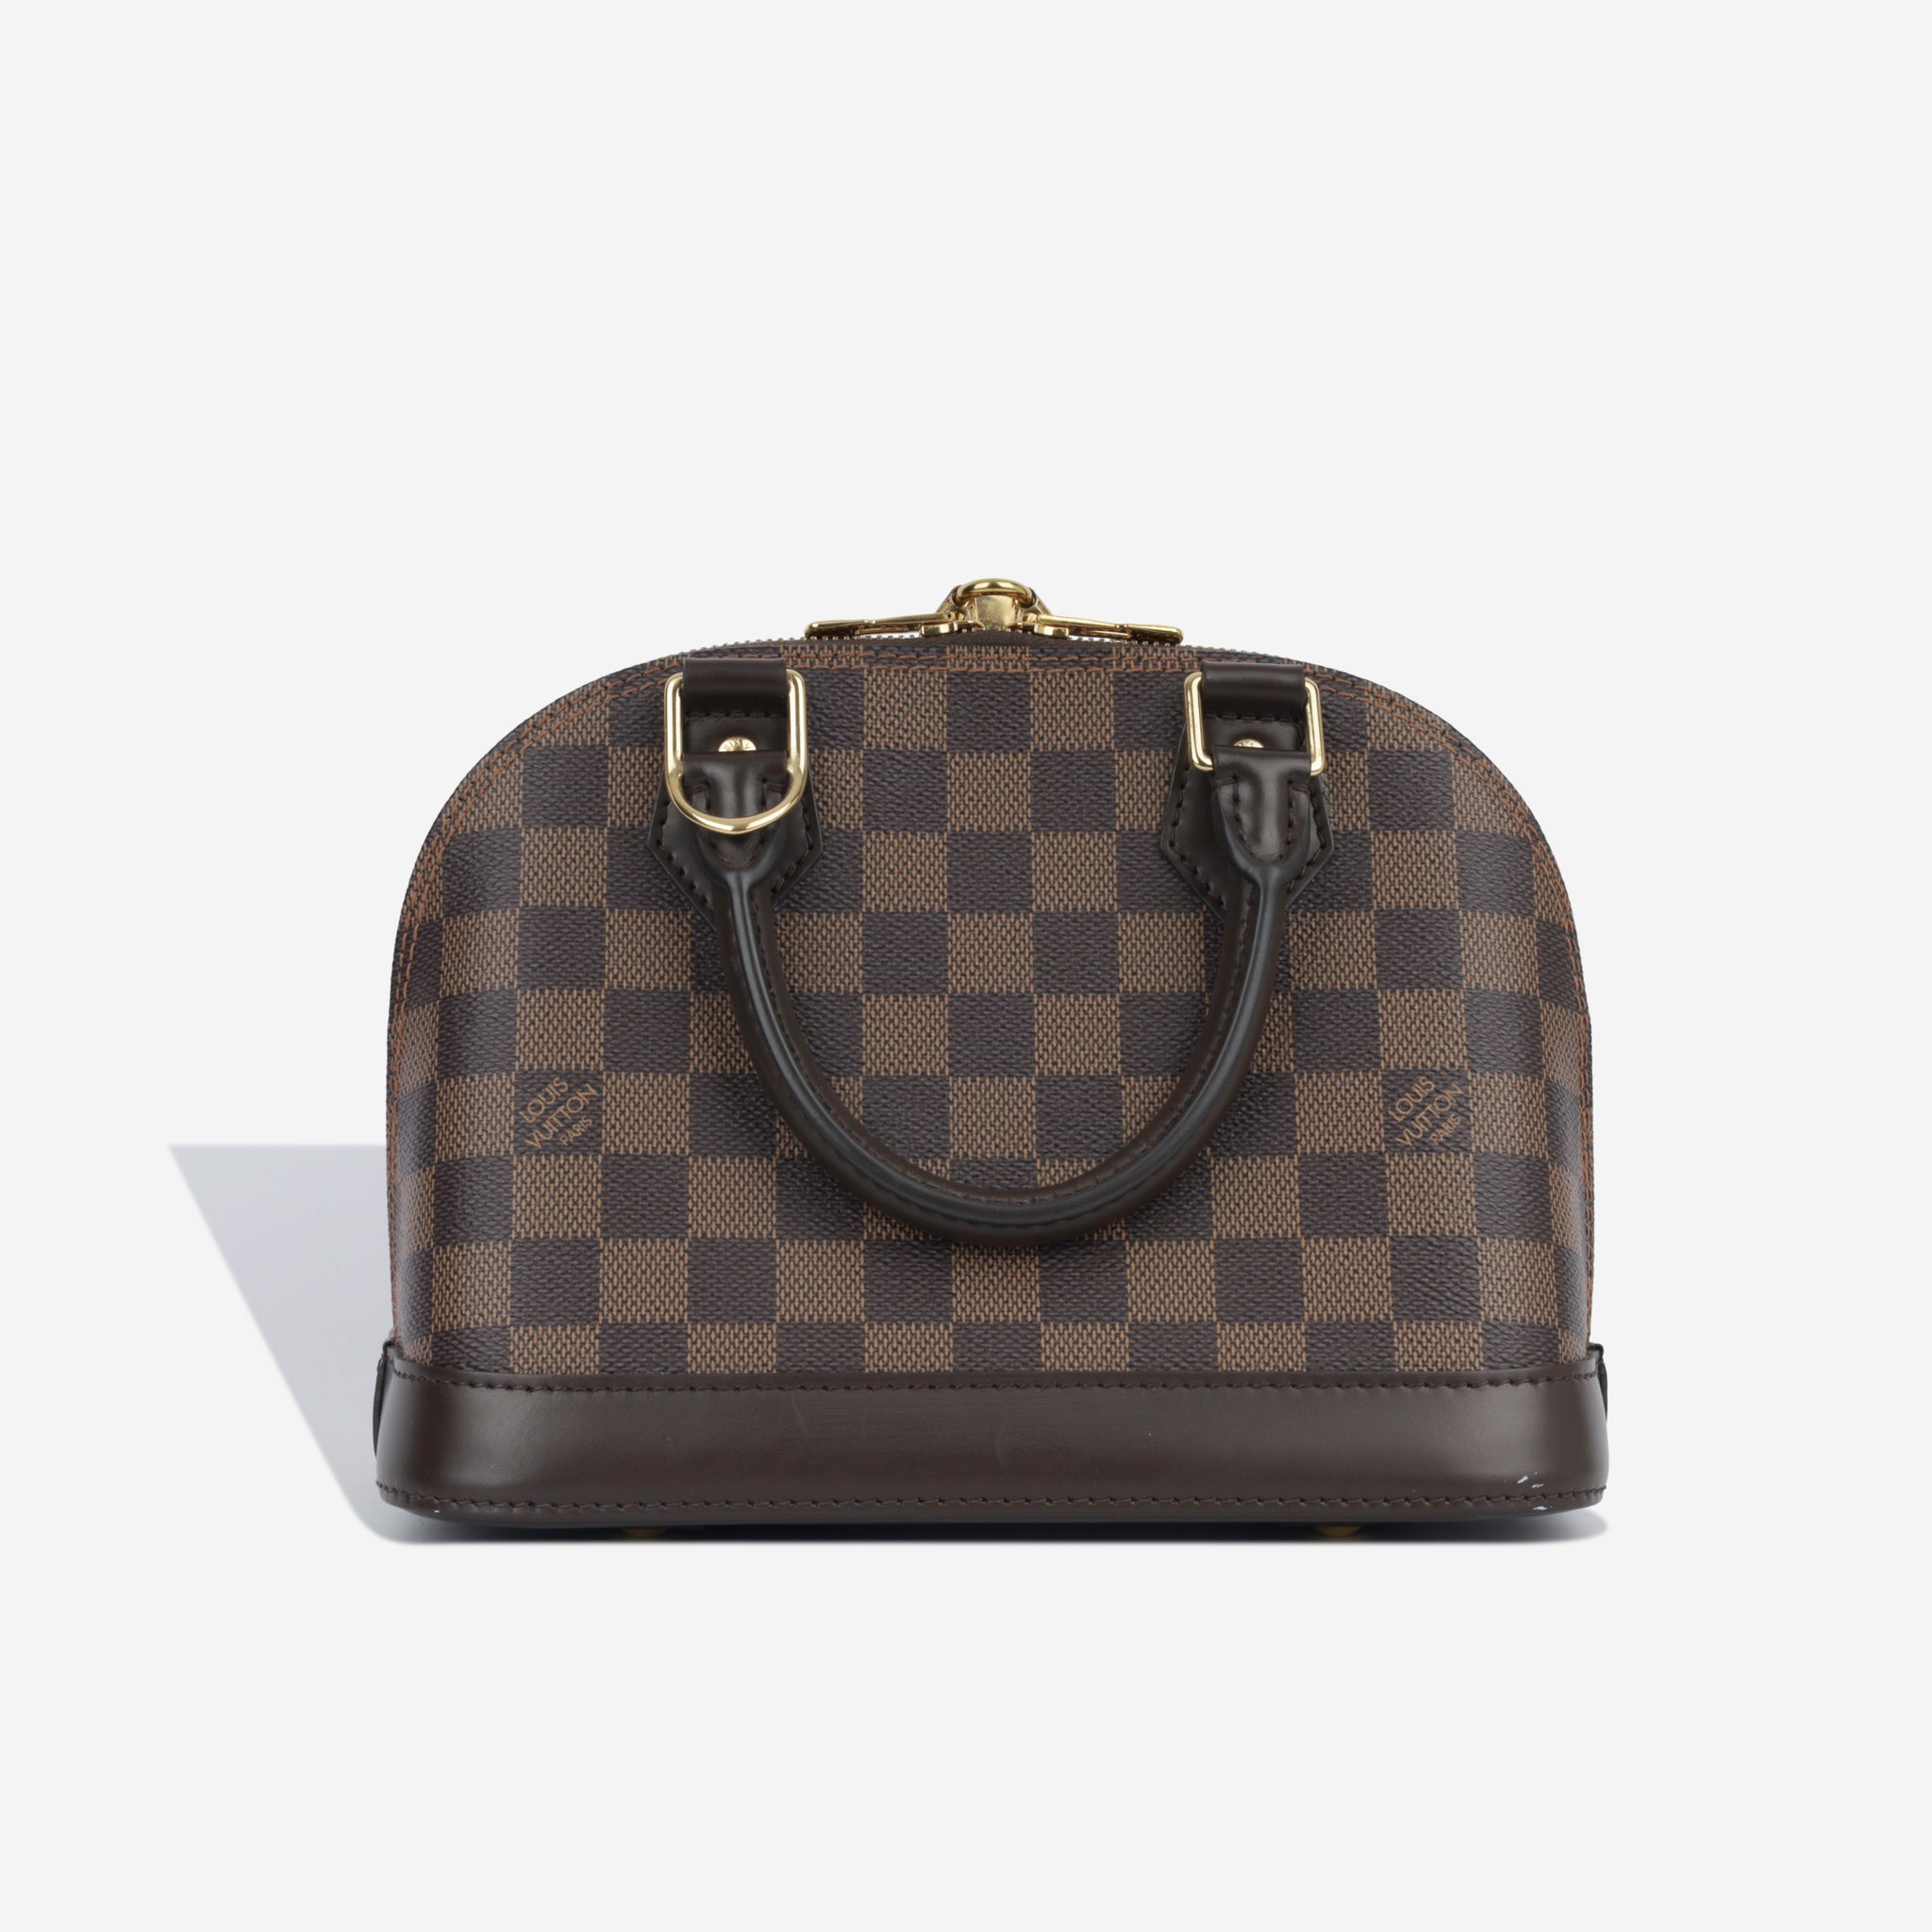 Louis Vuitton Alma Pm Damier Ebene Leather Canvas Handbag